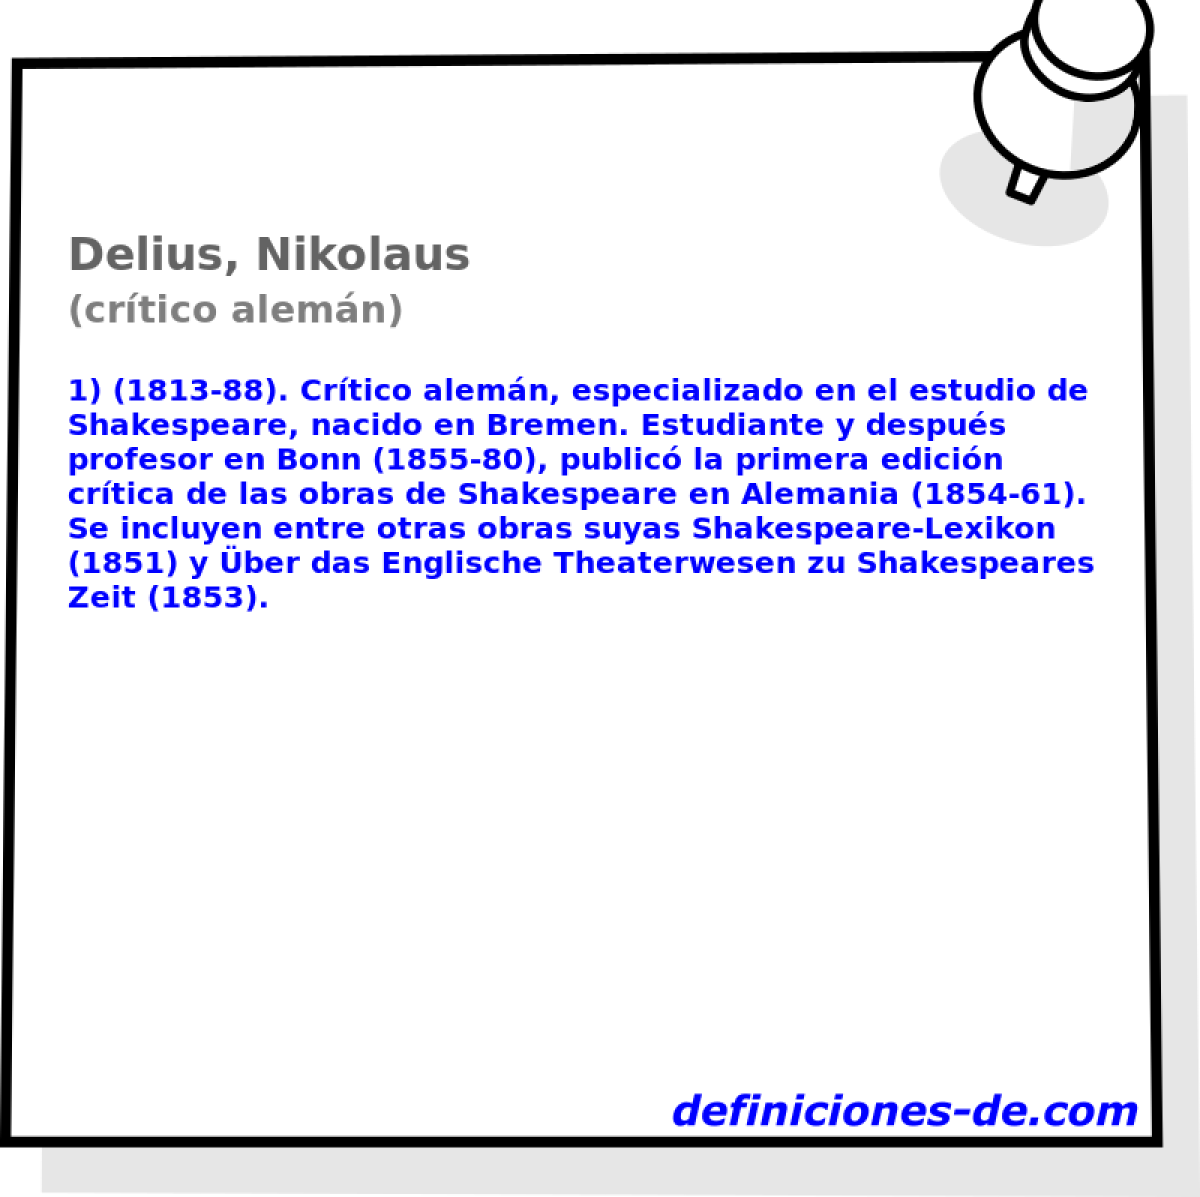 Delius, Nikolaus (crtico alemn)